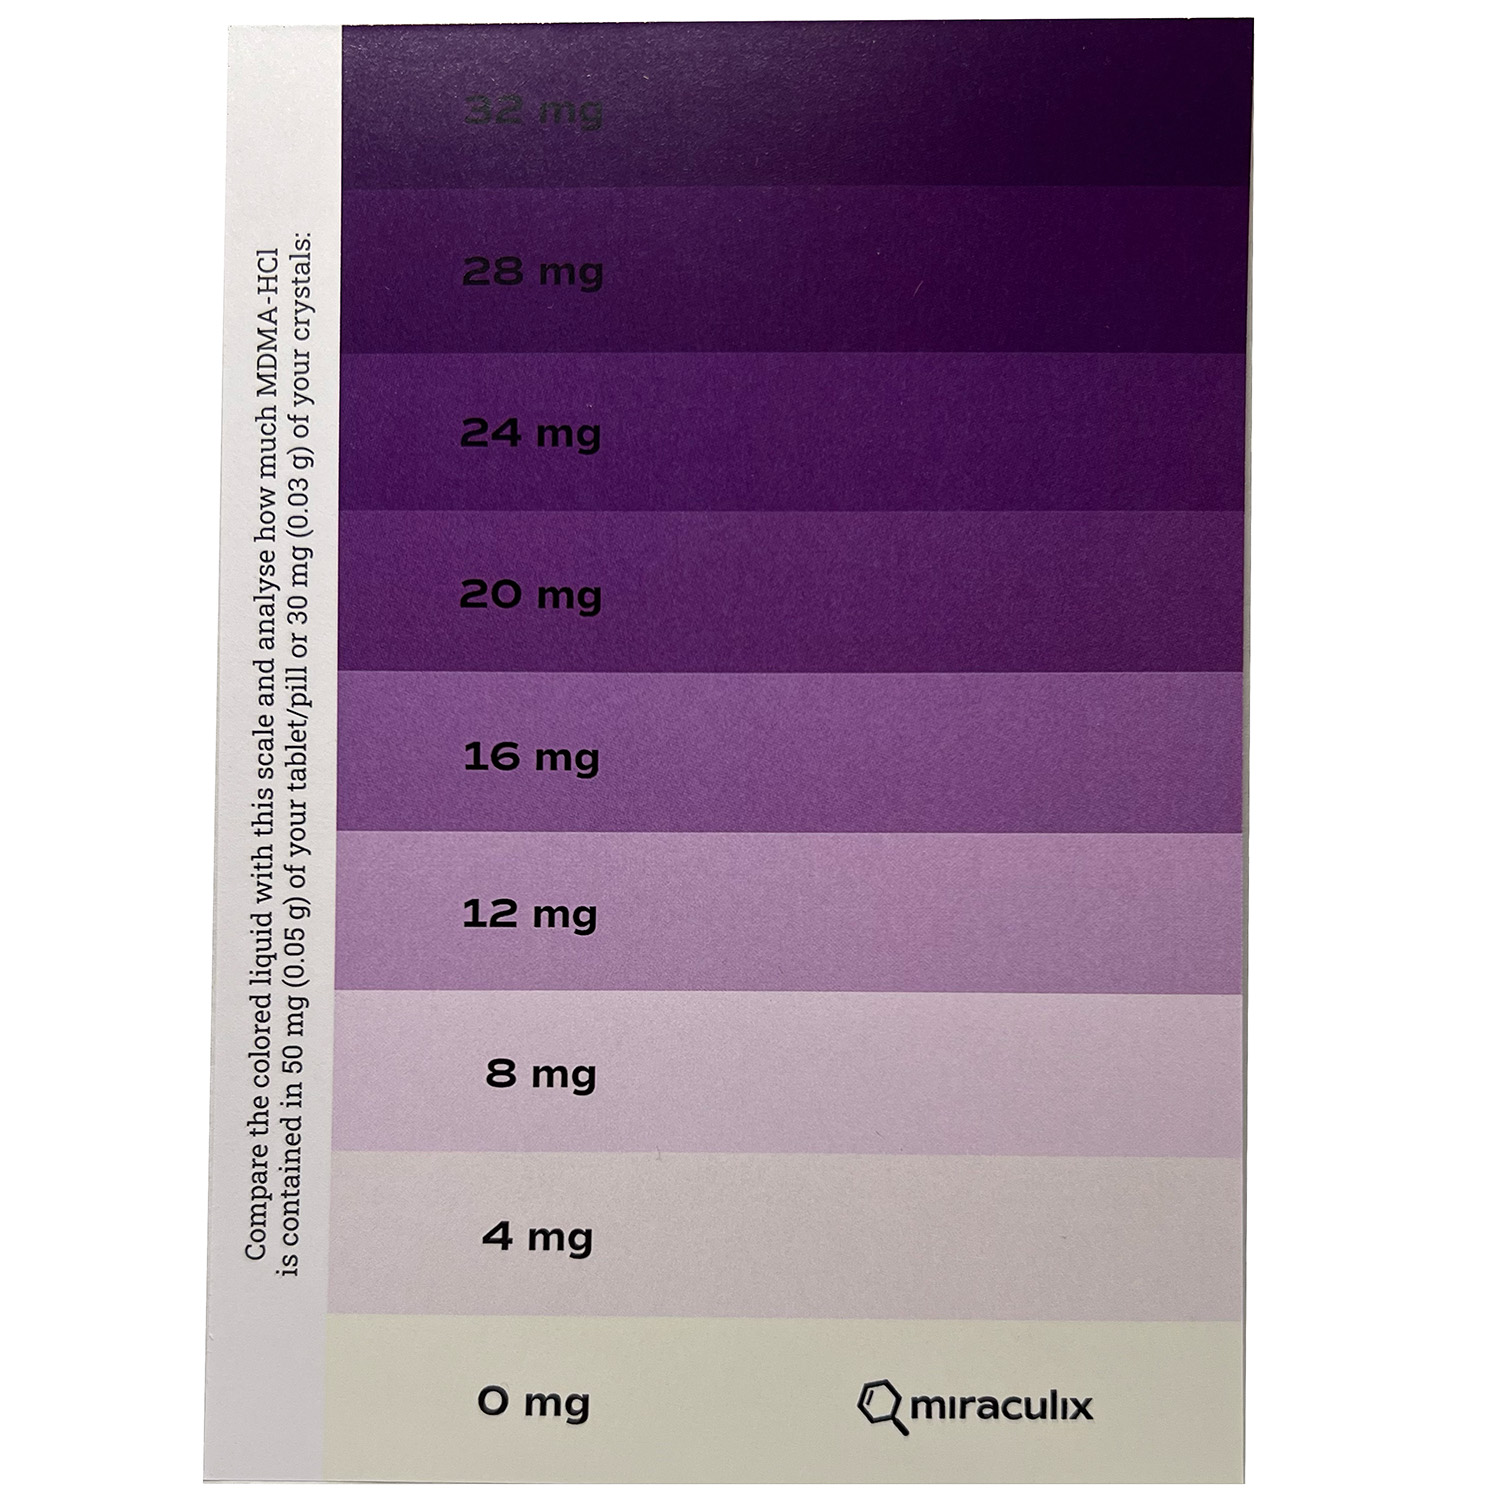 MDMA_color-chart